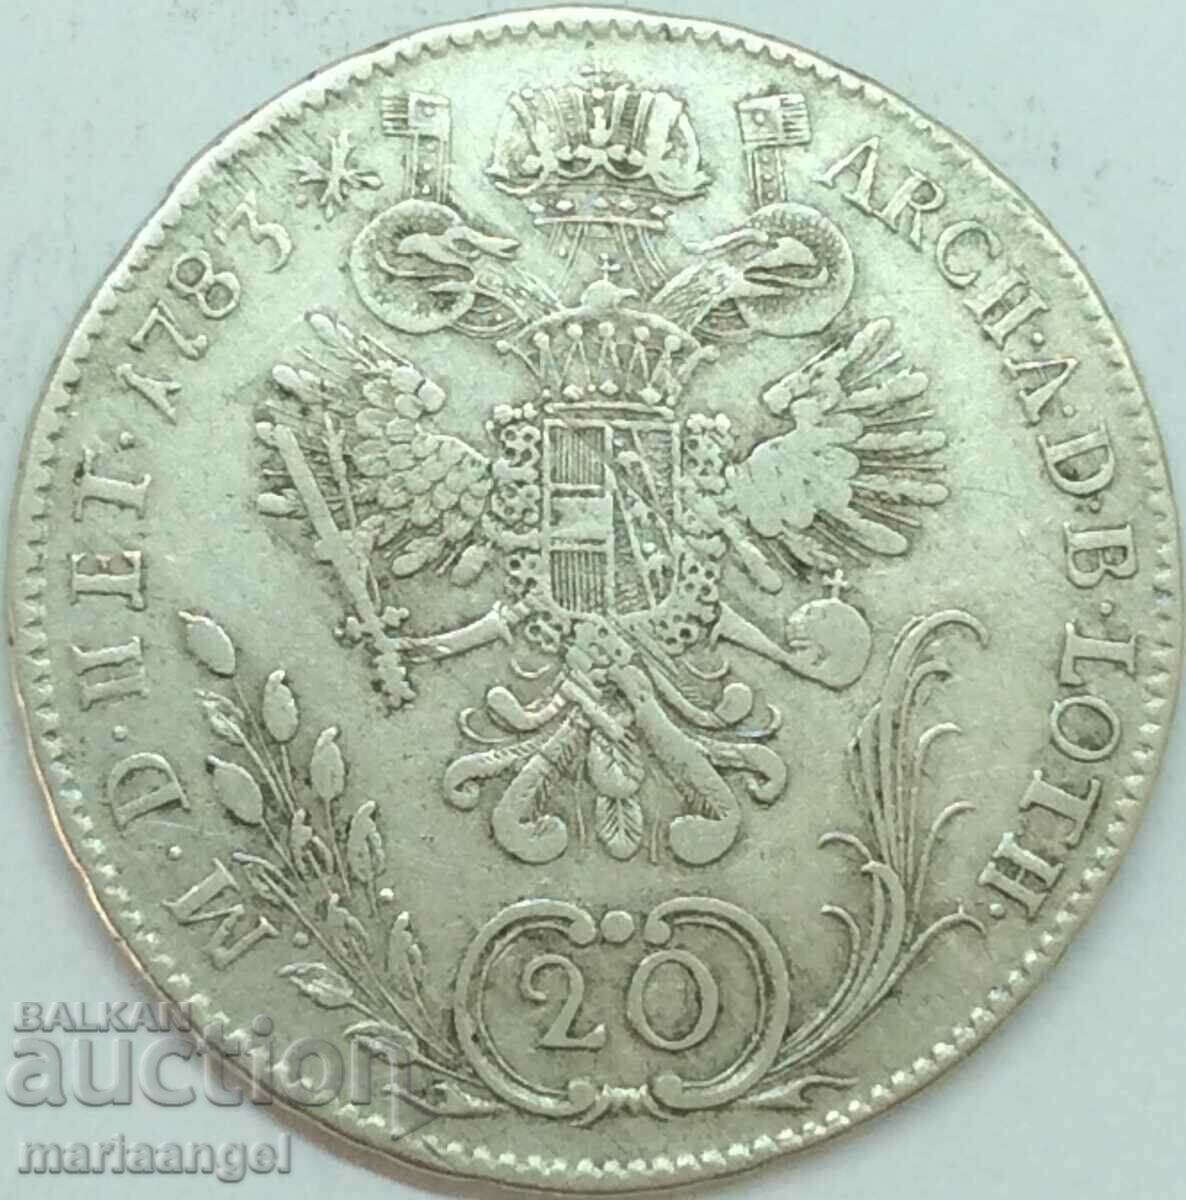 20 Kreuzer 1783 Αυστρία Joseph II C - Πράγα - σπάνιο